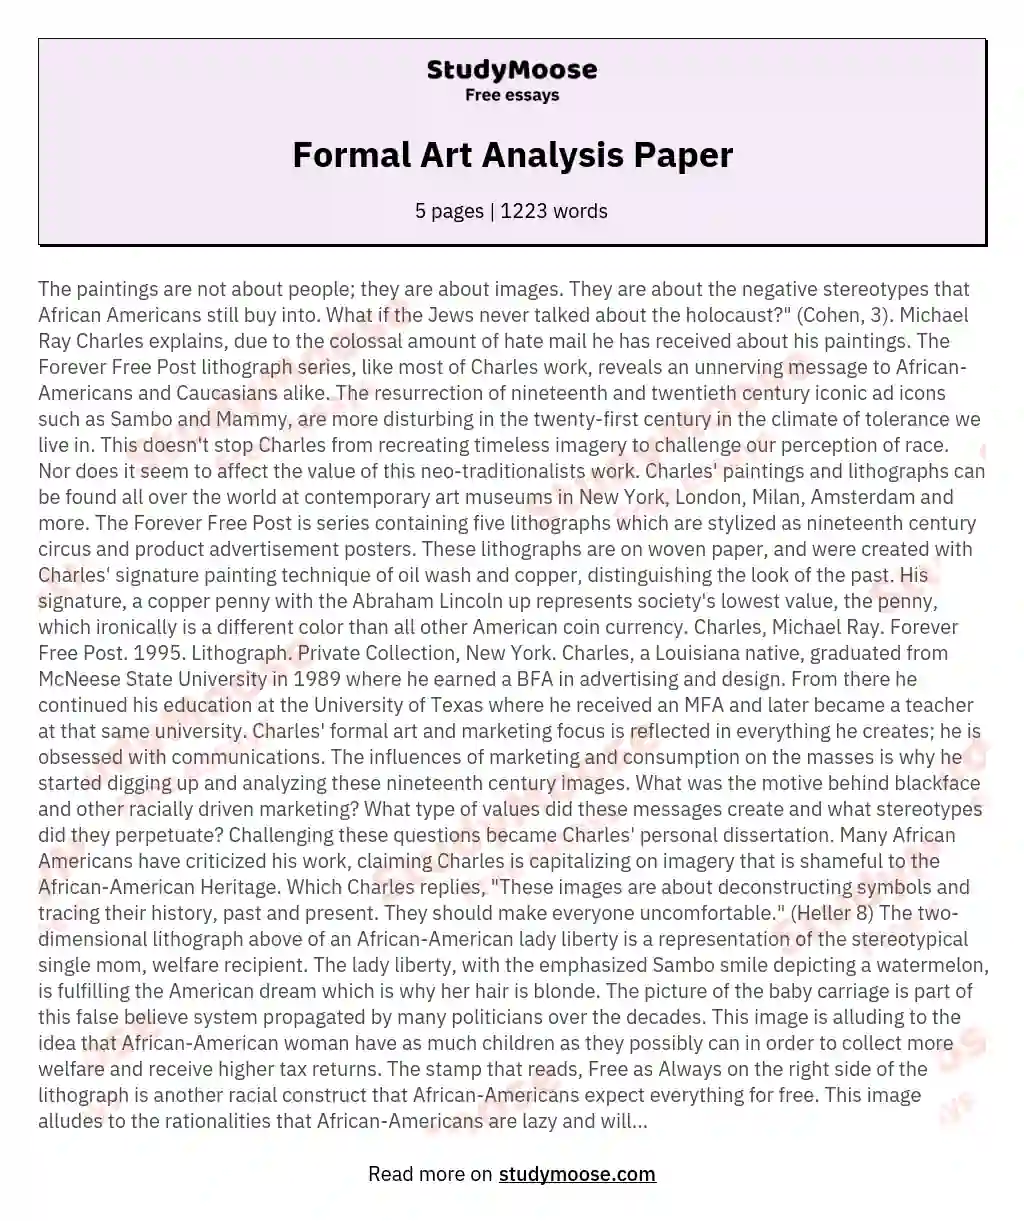 Formal Art Analysis Paper essay